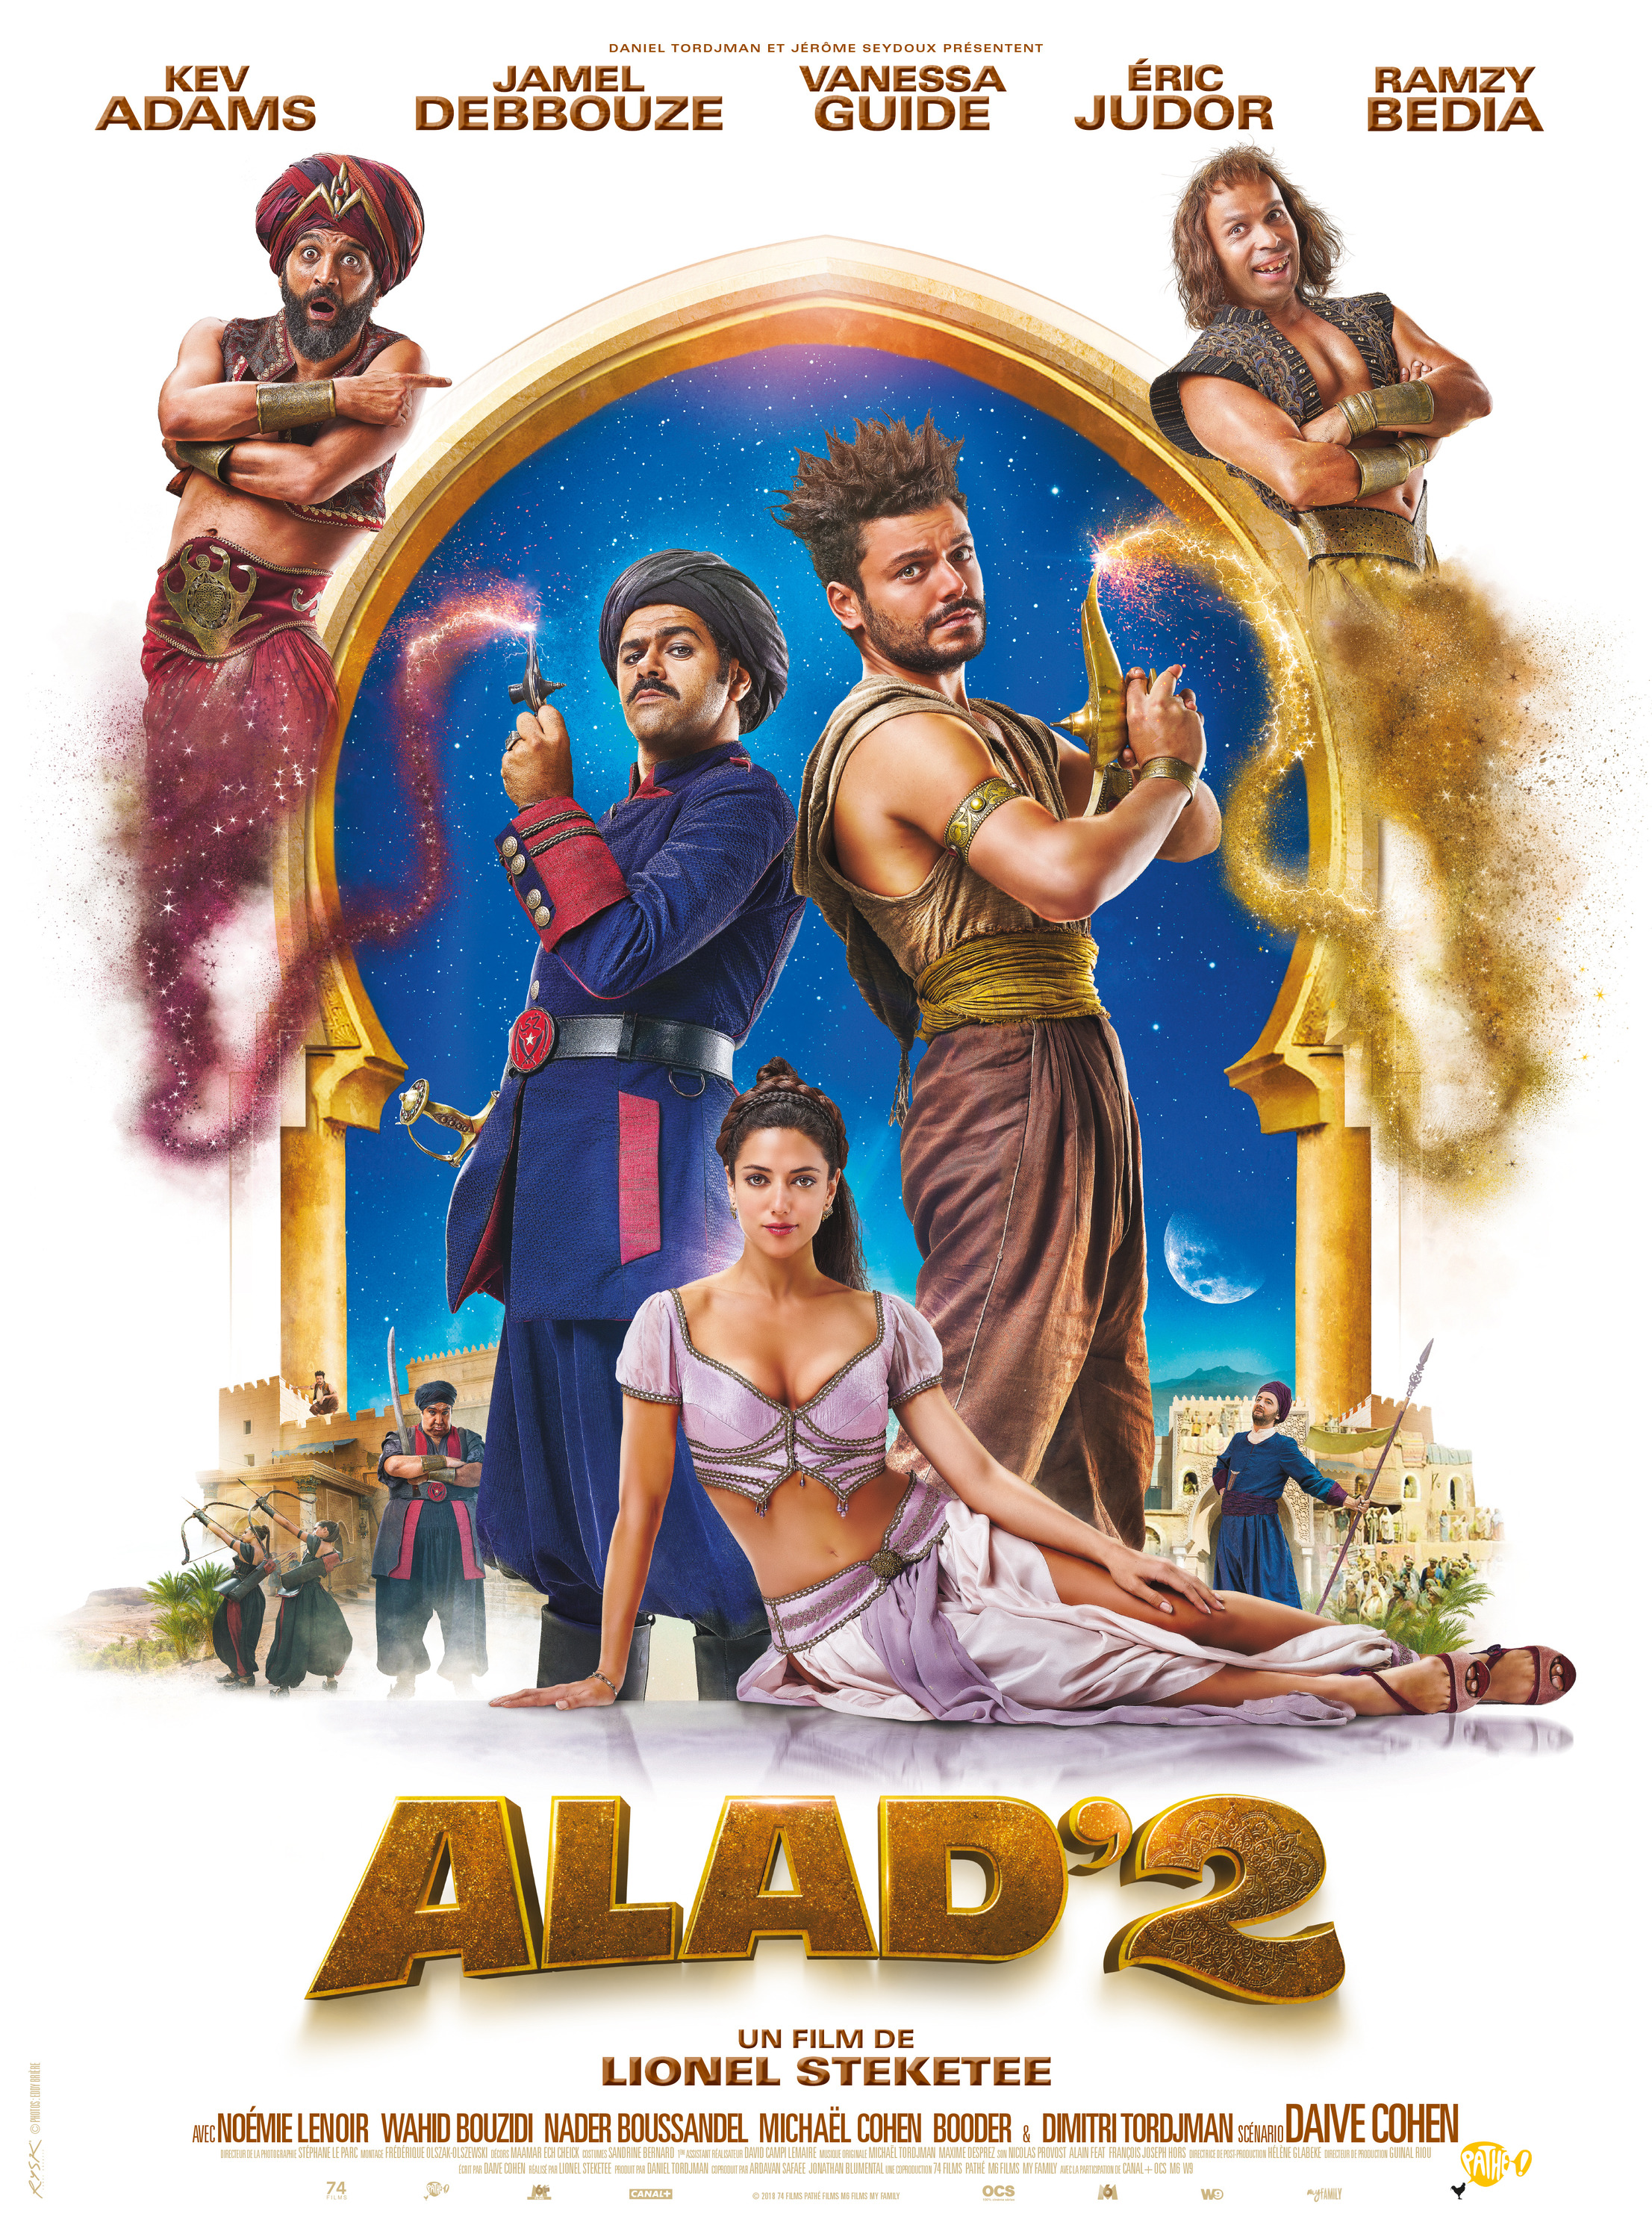 Mega Sized Movie Poster Image for Alad'2 